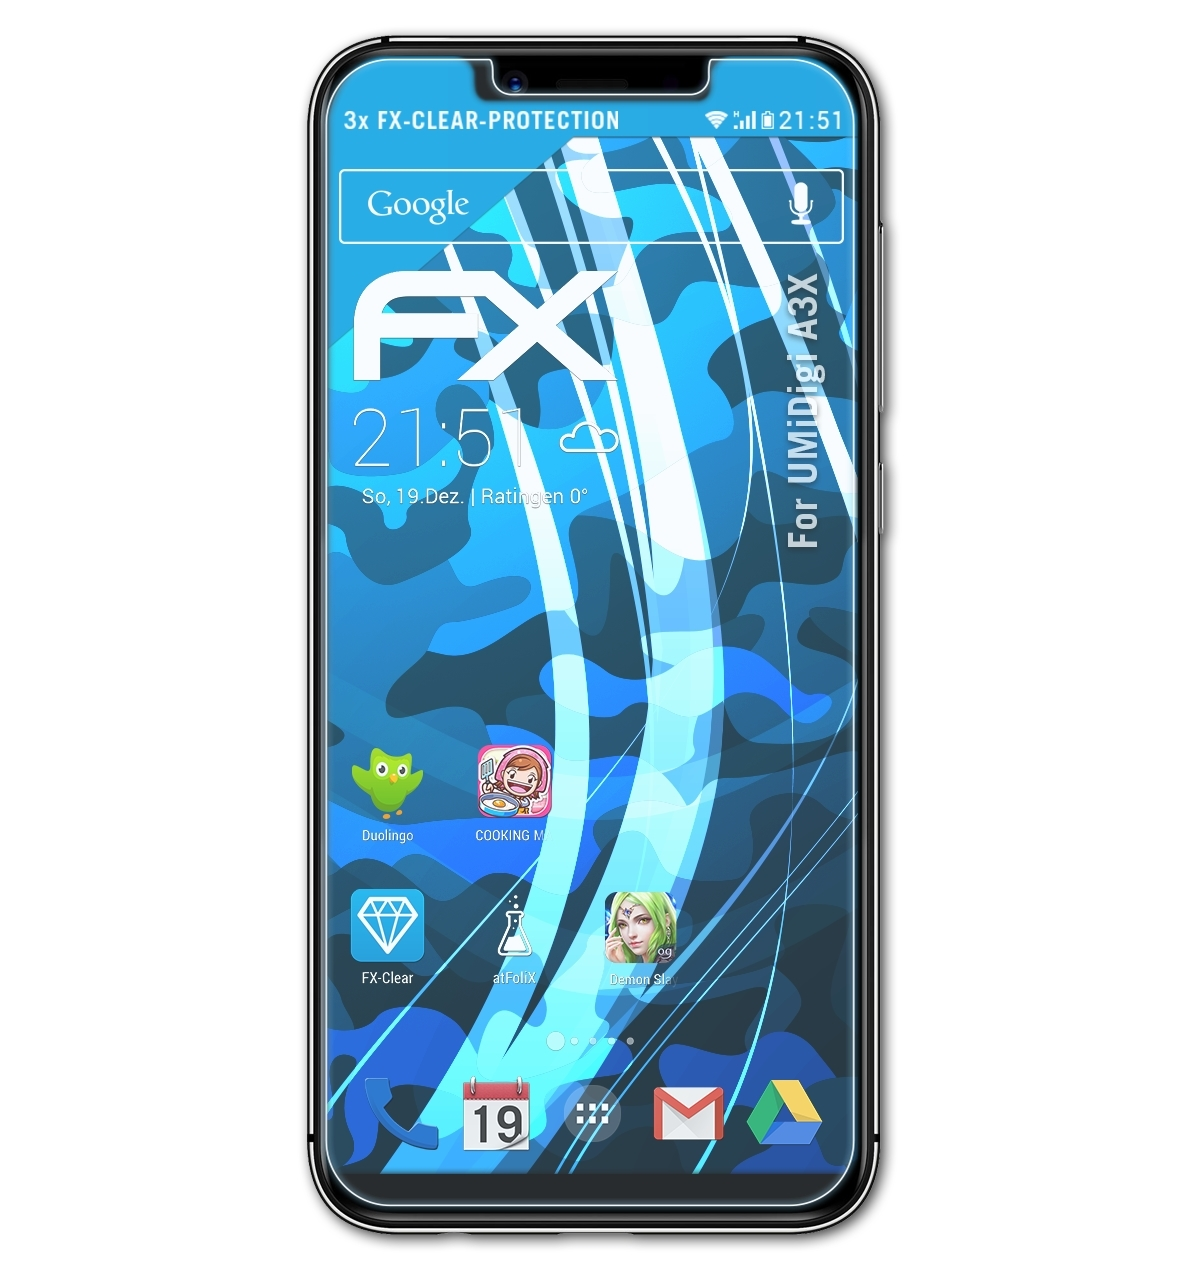 ATFOLIX 3x FX-Clear Displayschutz(für UMiDigi A3X)